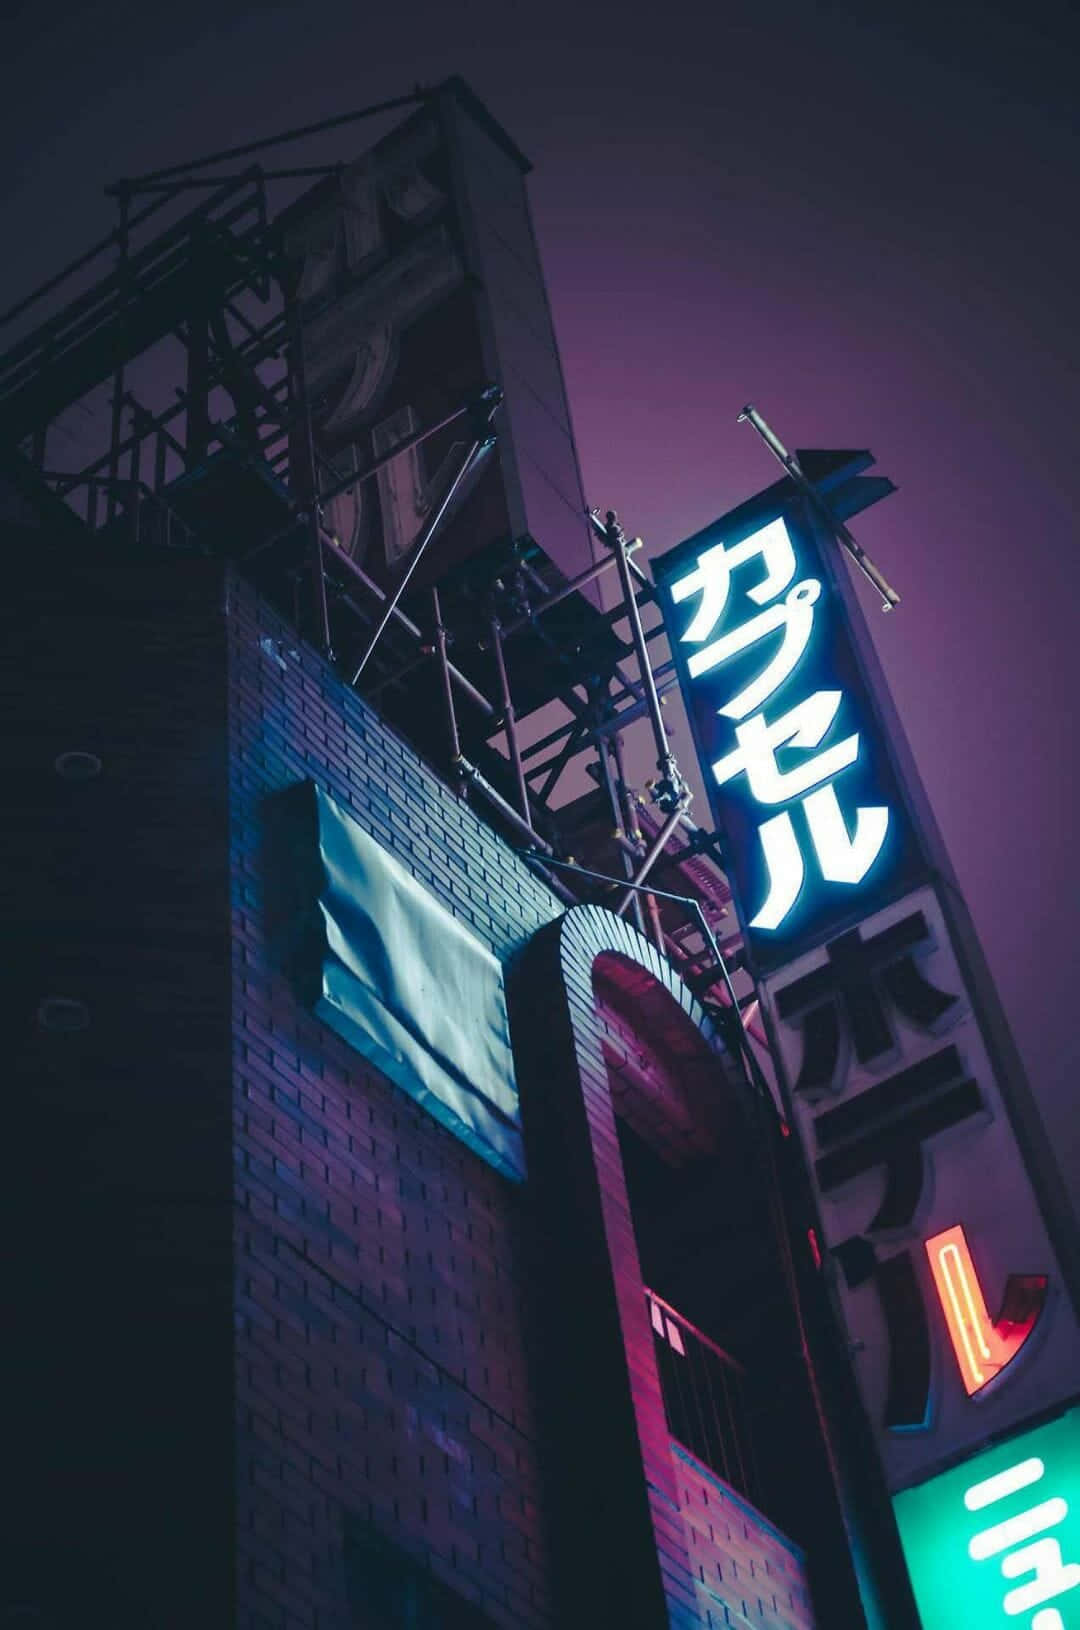 Farverige neon skilte lyser nattescenen op i Japan. Wallpaper